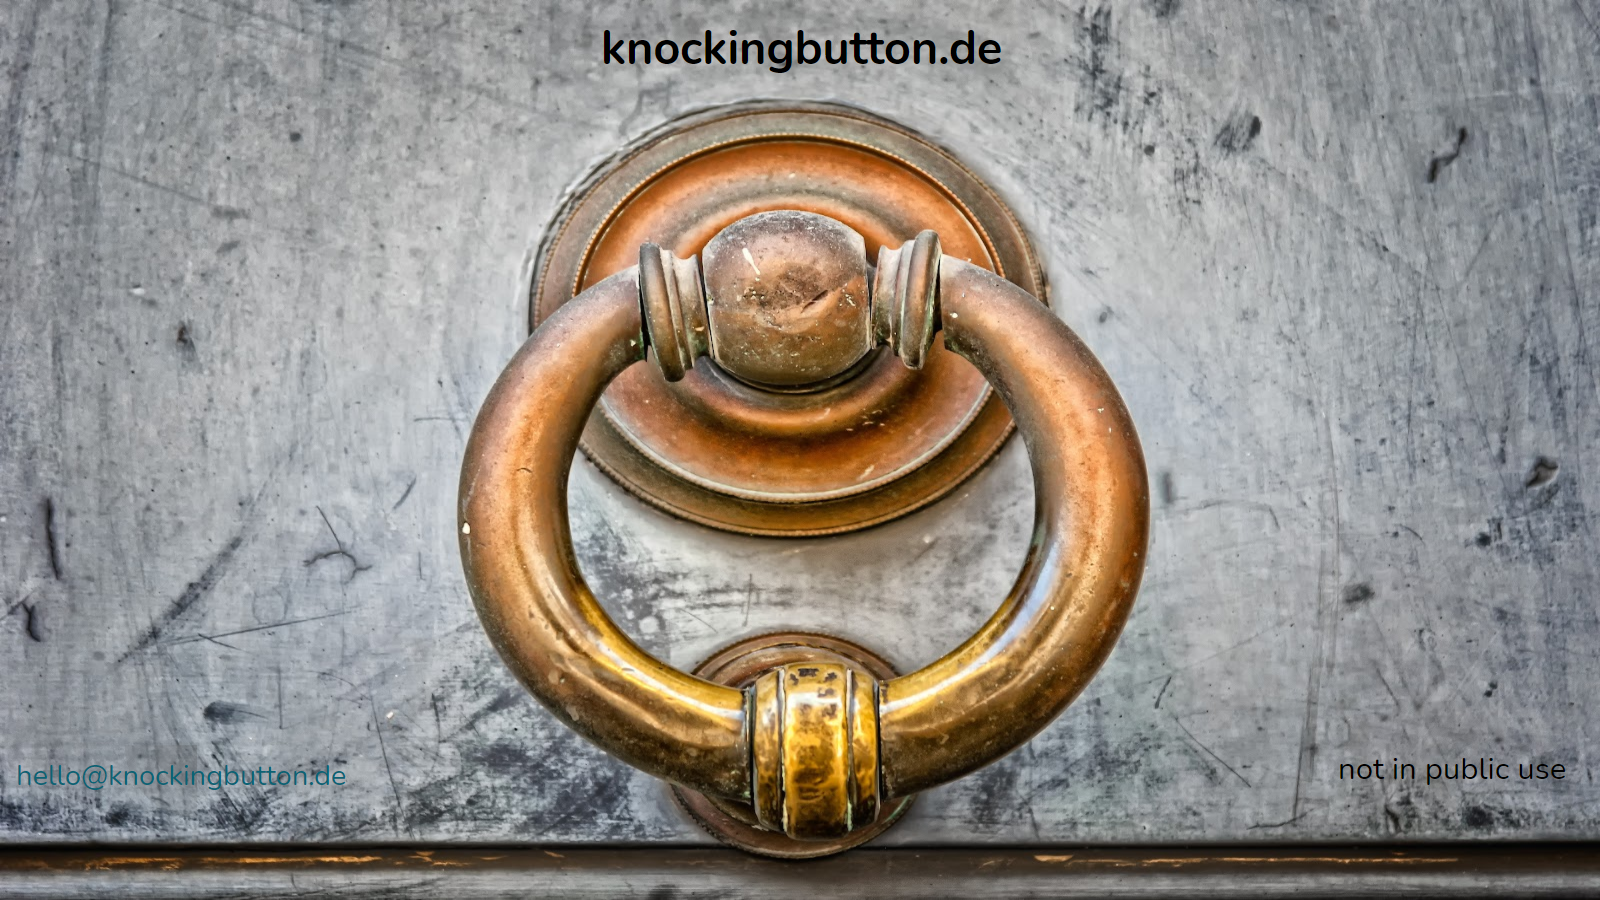 www.knockingbutton.de